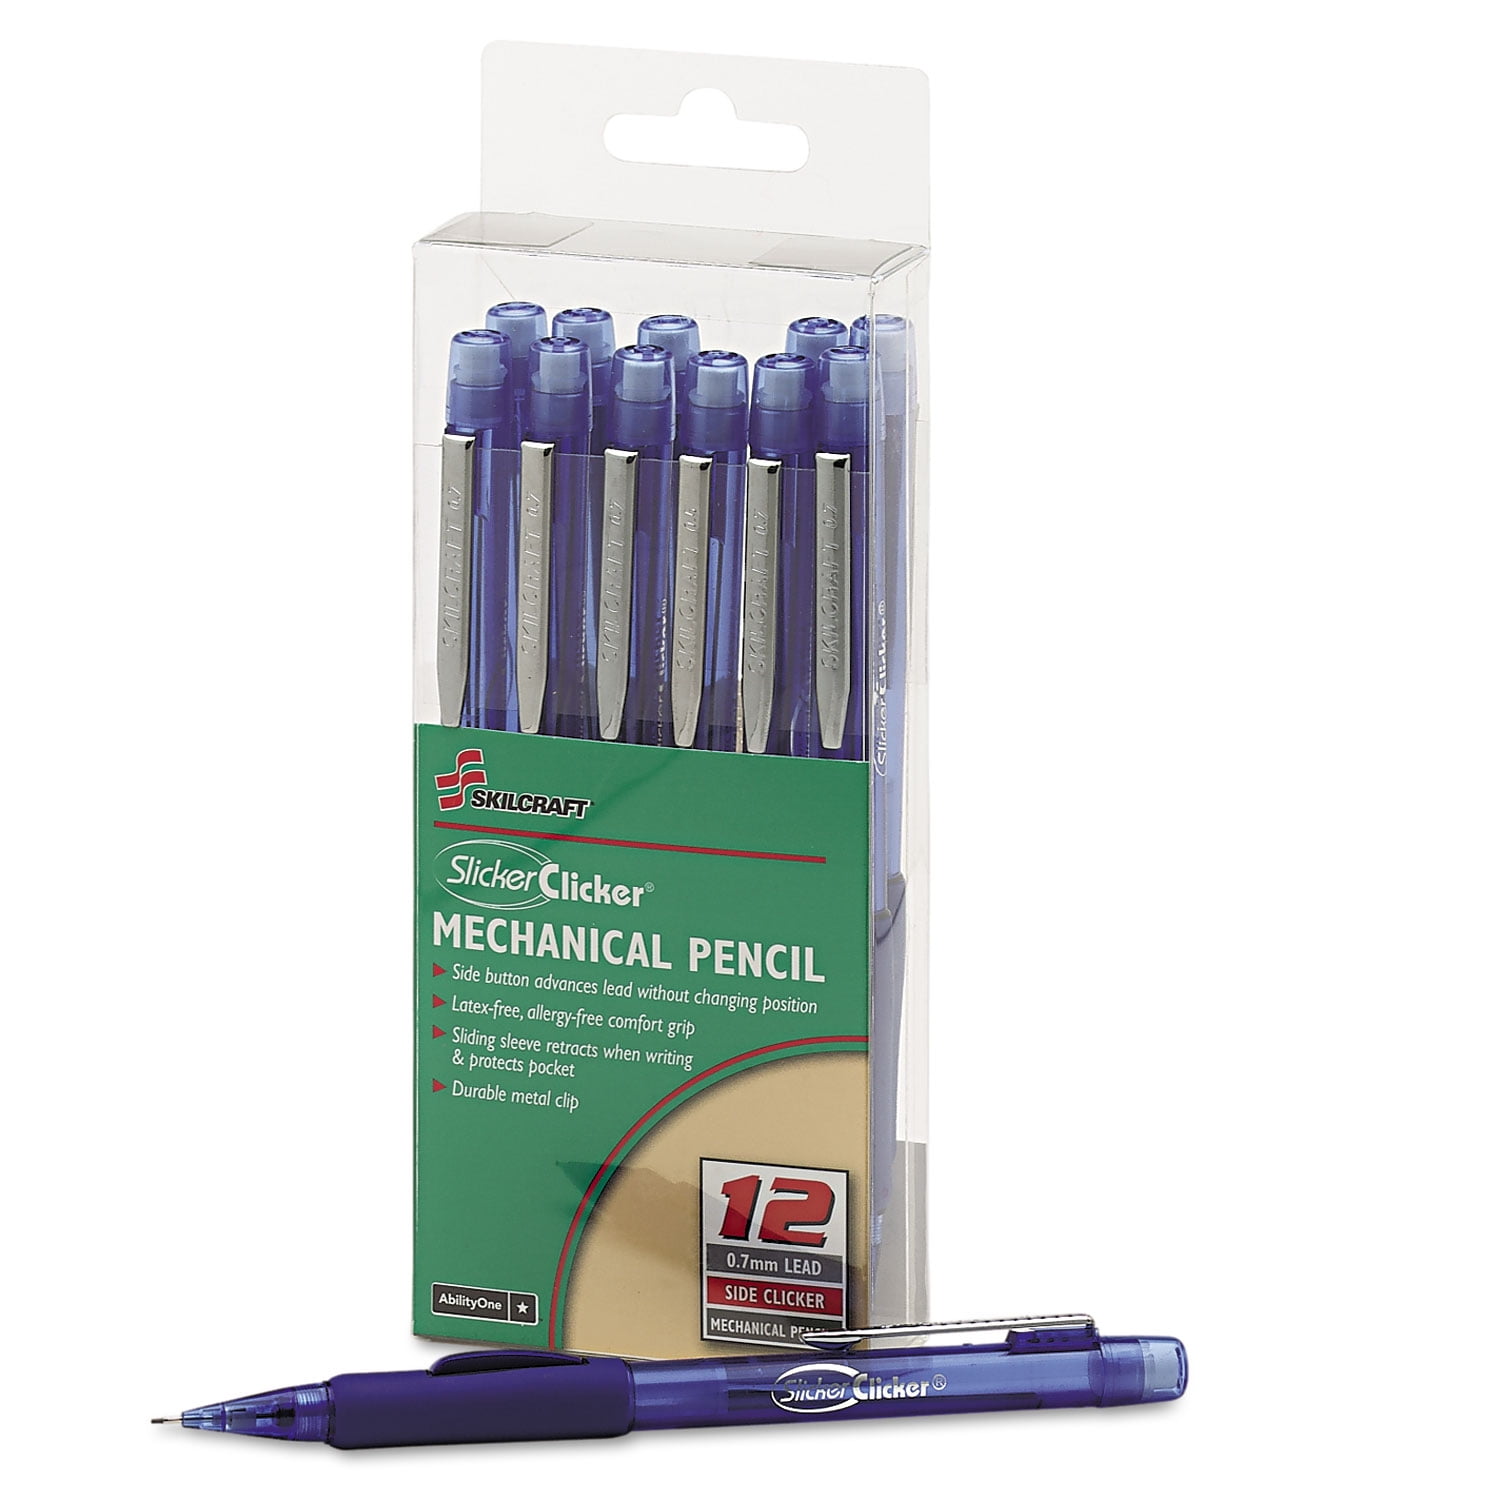 Nicpro 3 Pack Carpenter Pencil with Sharpener, Mechanical Carpenter Pe